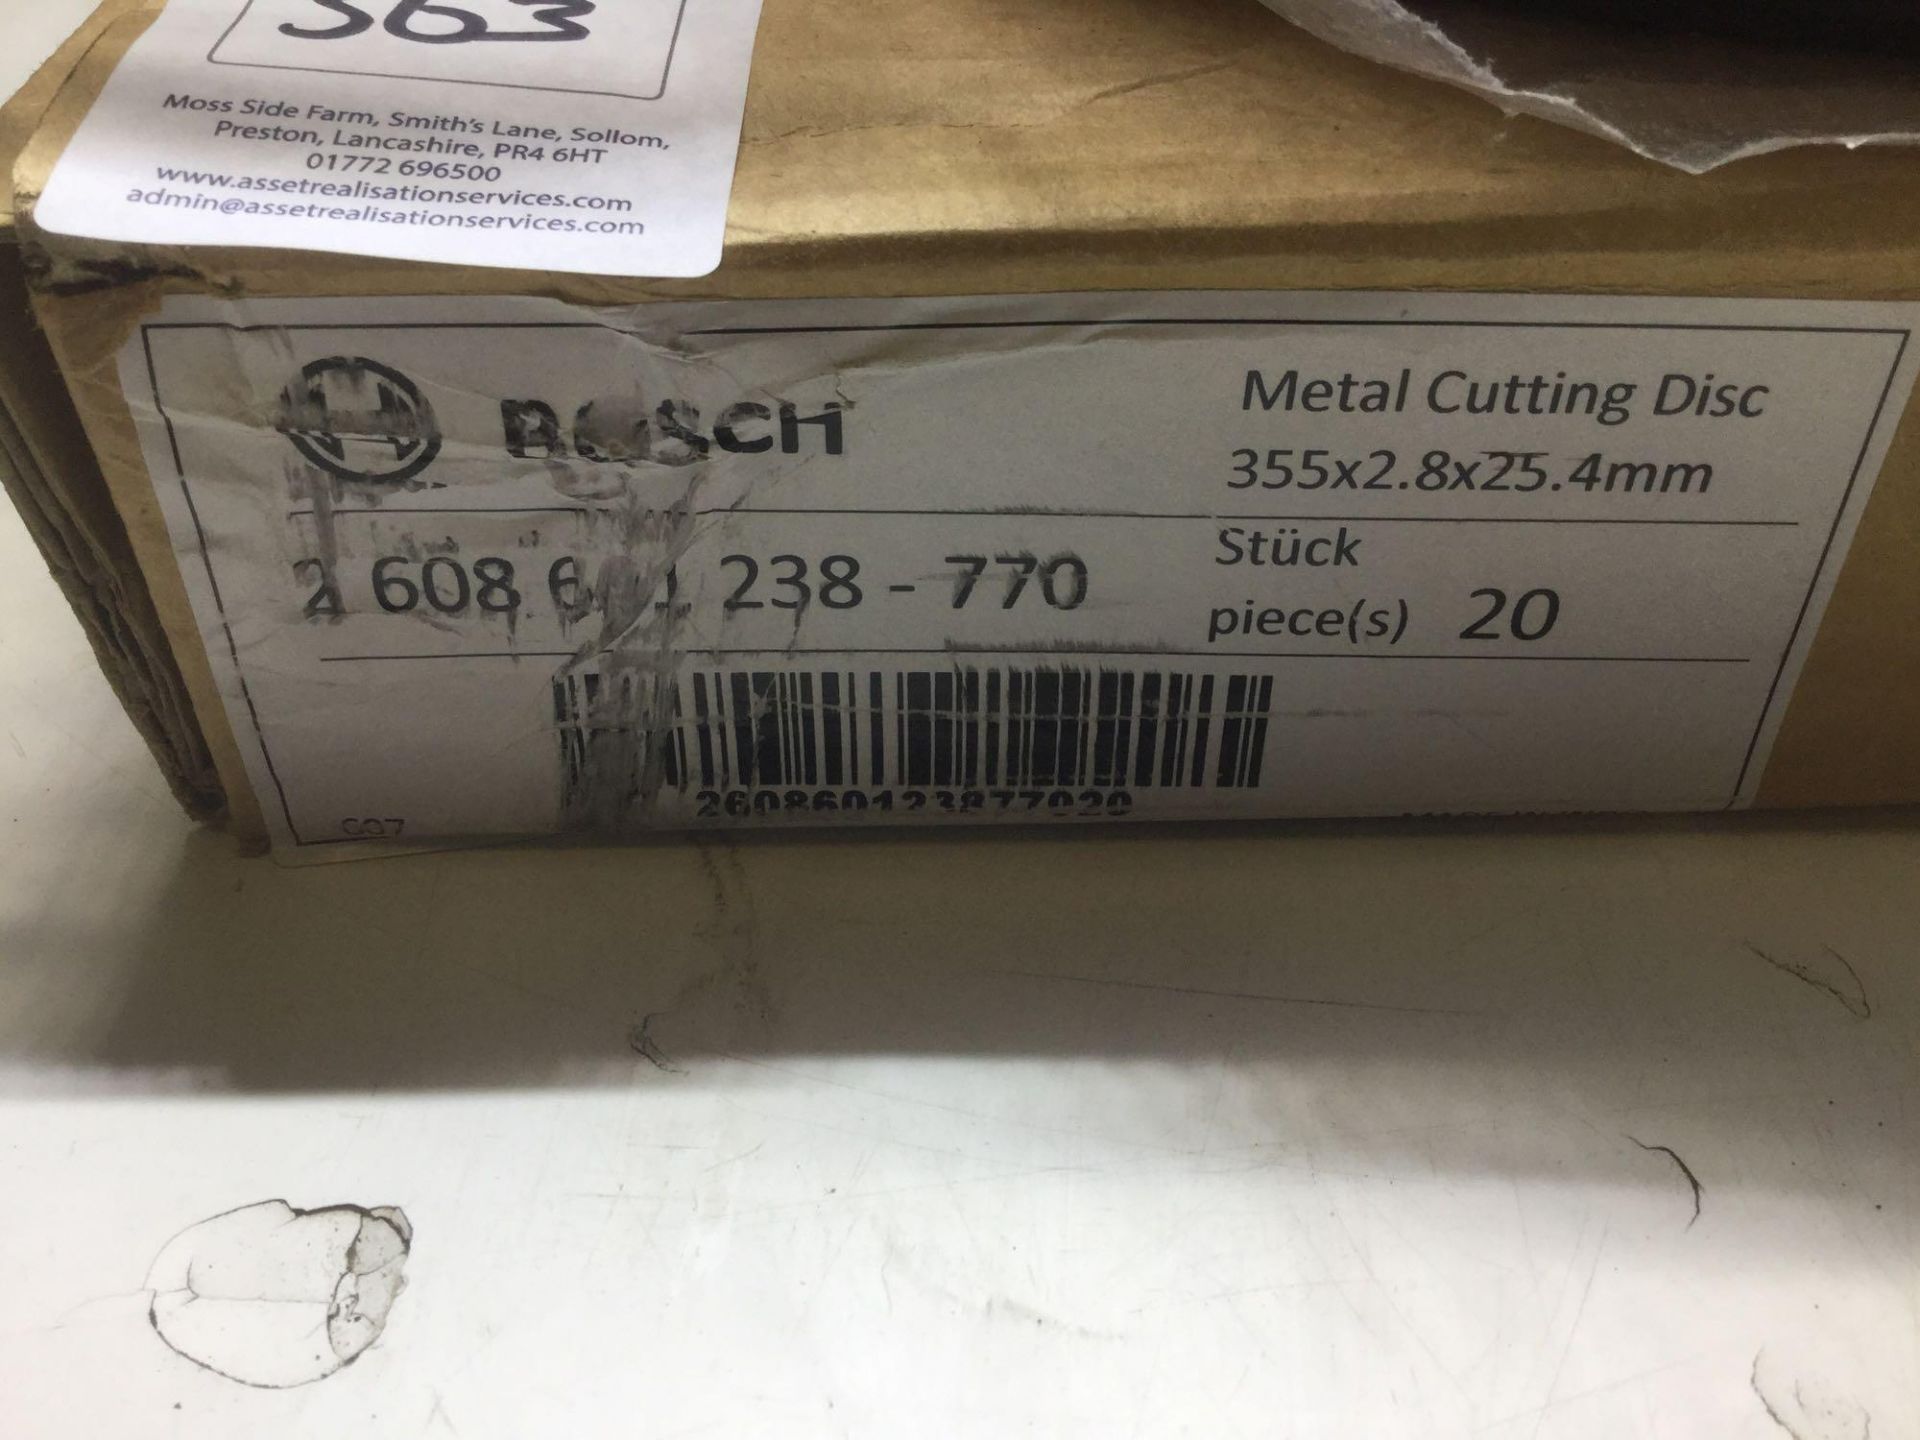 X10 Bosch Expert Metal Cutting Discs 355mm - Image 2 of 3